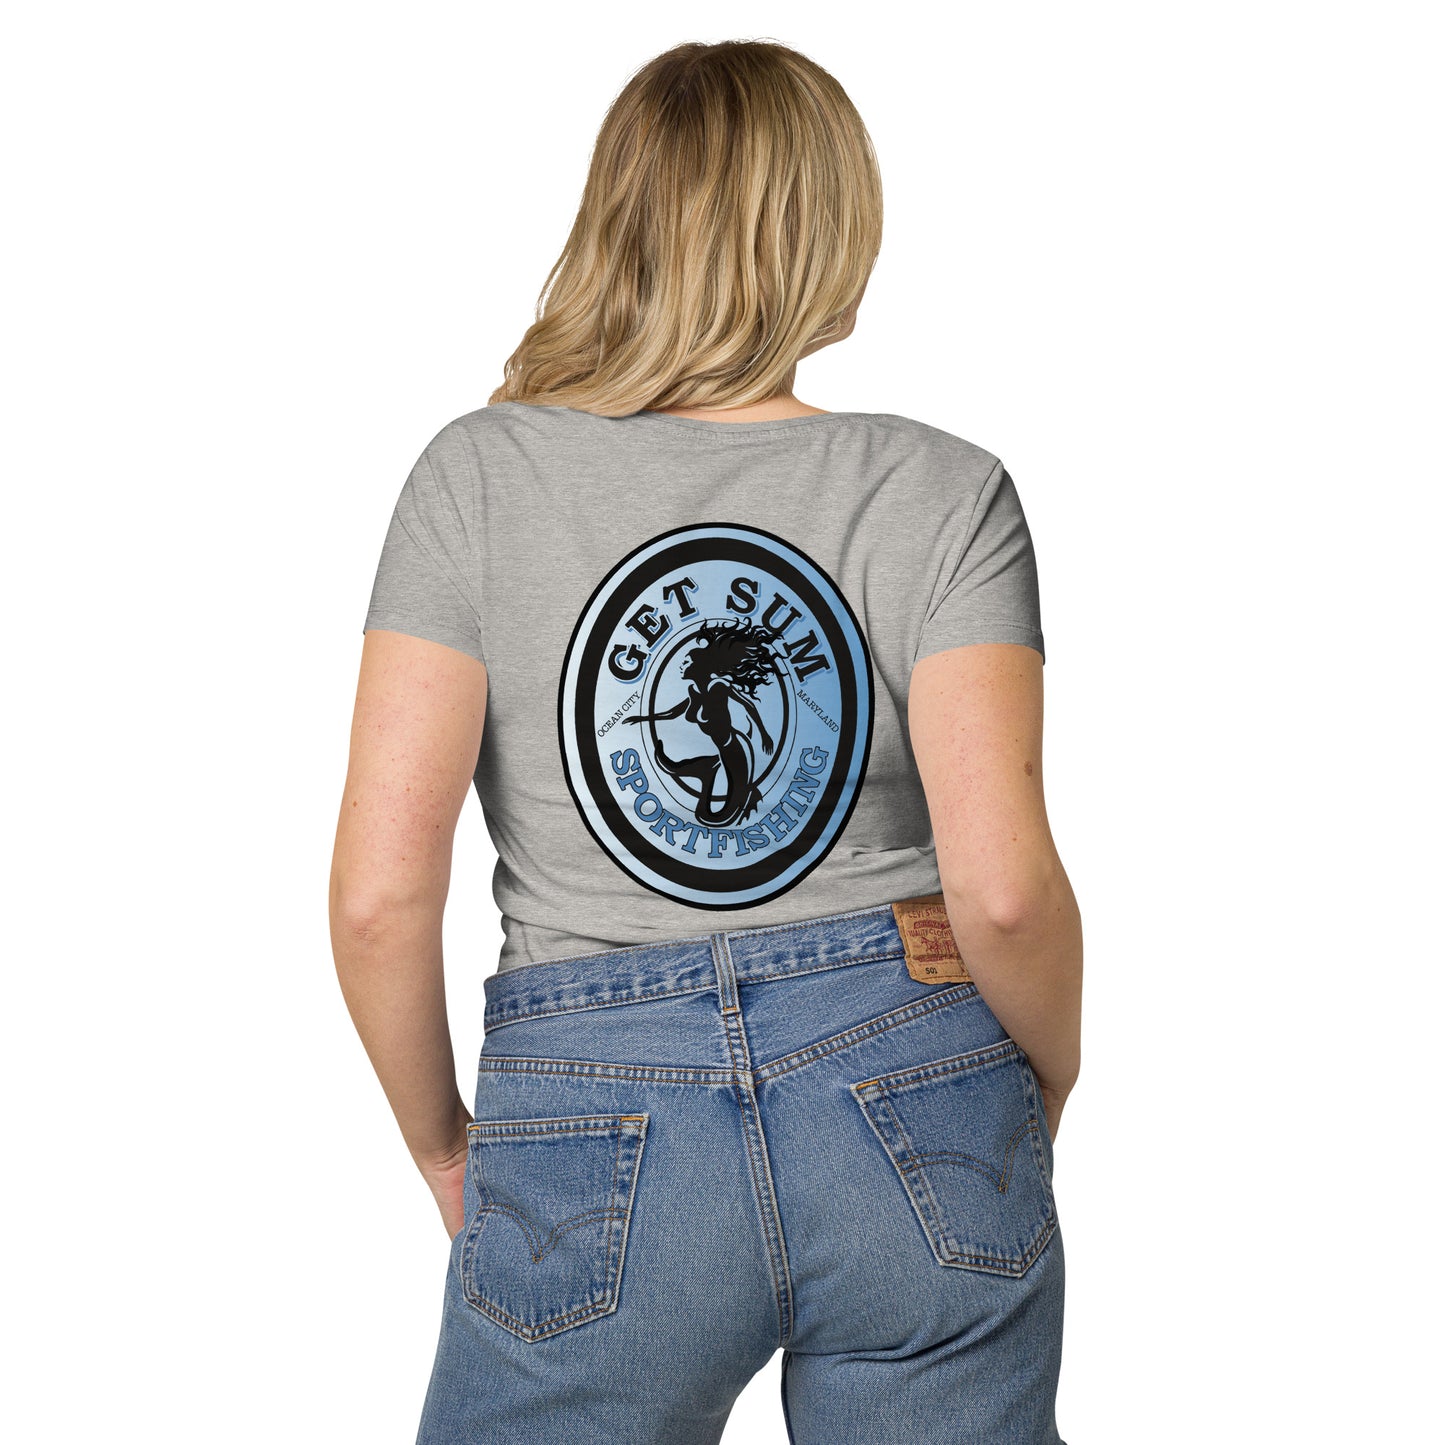 Get Sum Oval- ice fade Women’s basic organic t-shirt